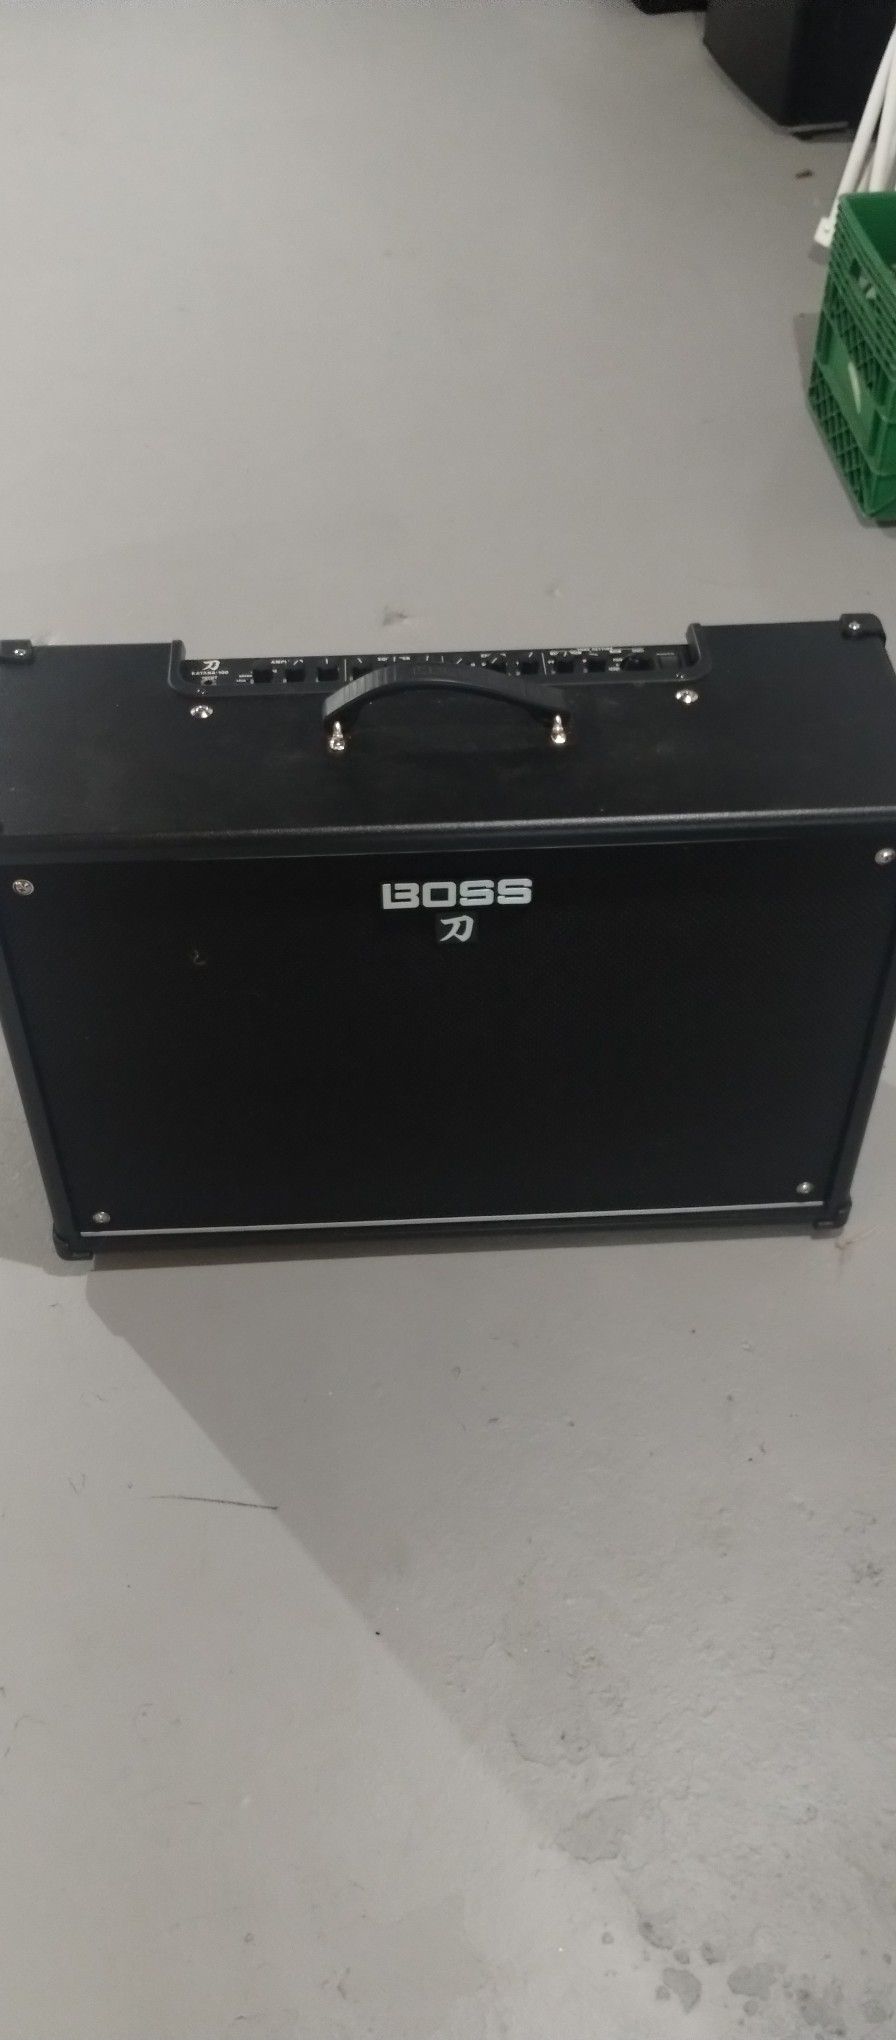 BOSS Amplifier Must Sell!

